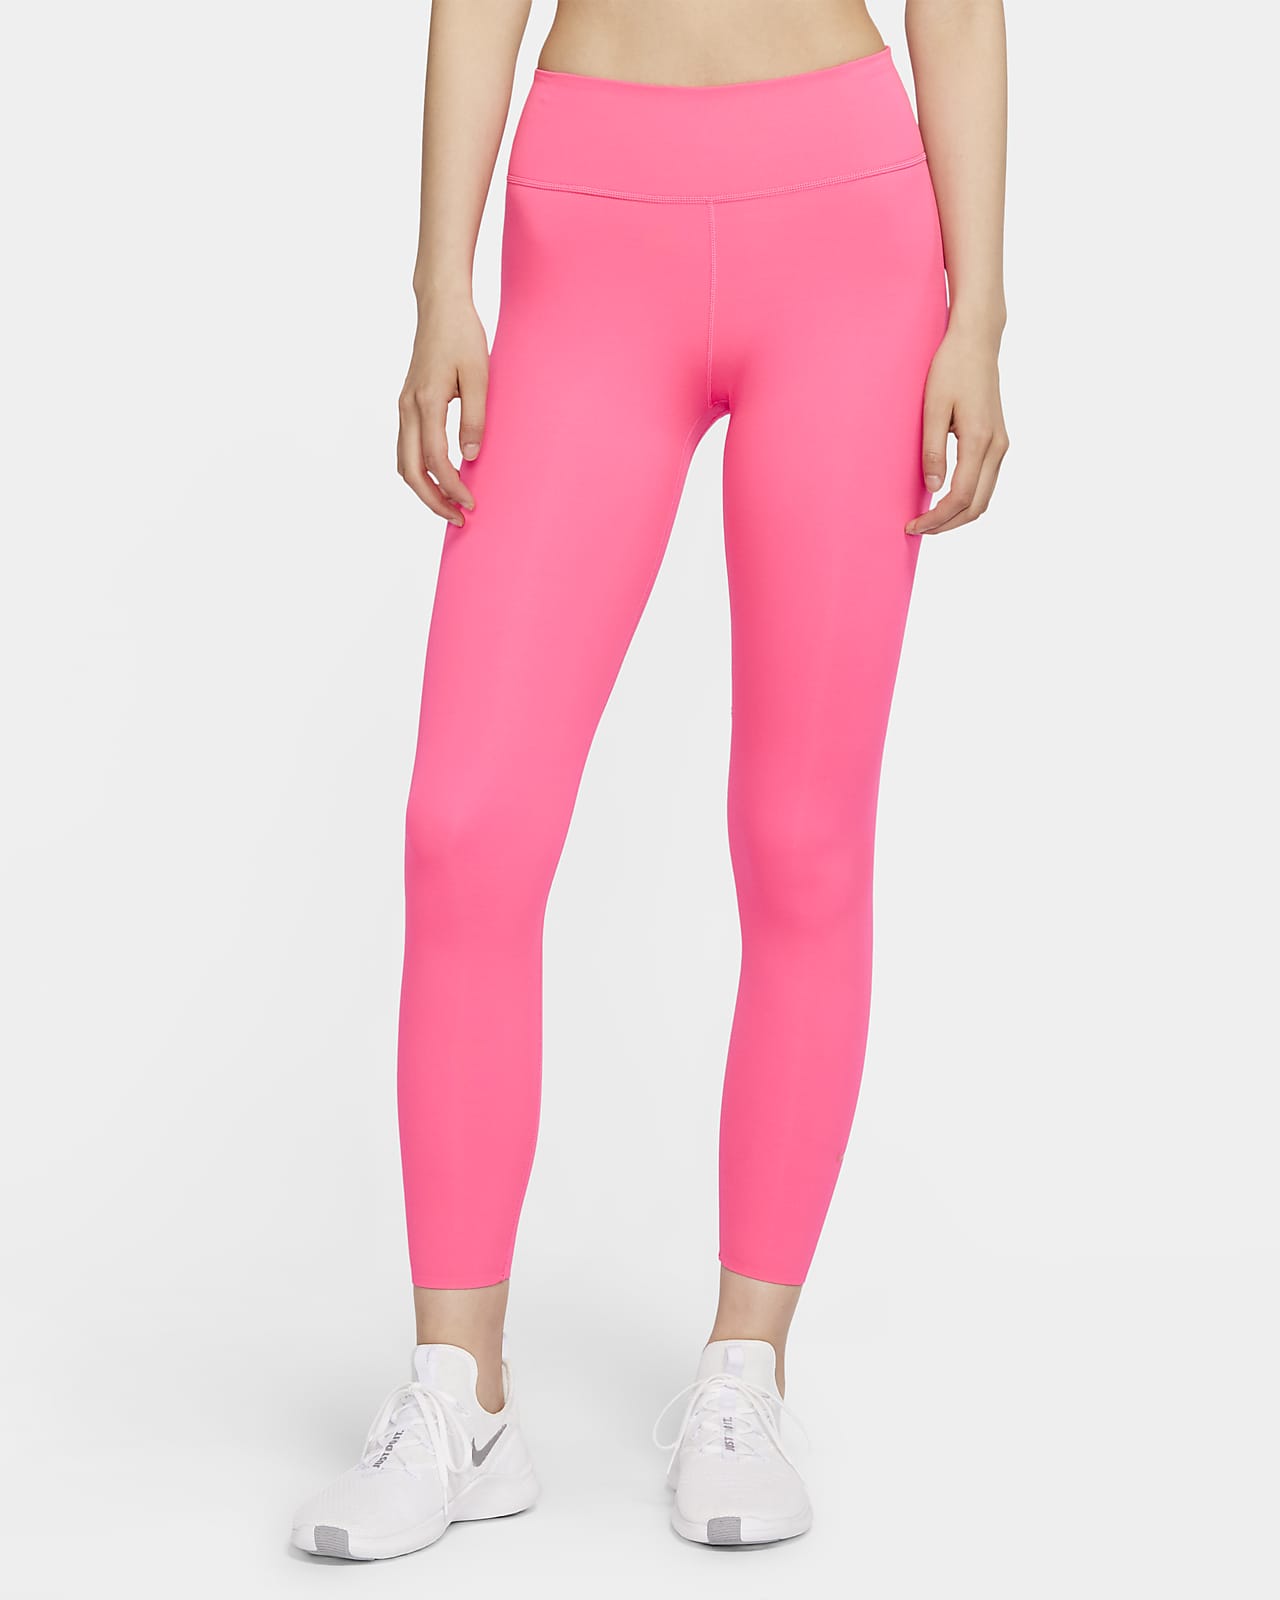 nike one pink leggings